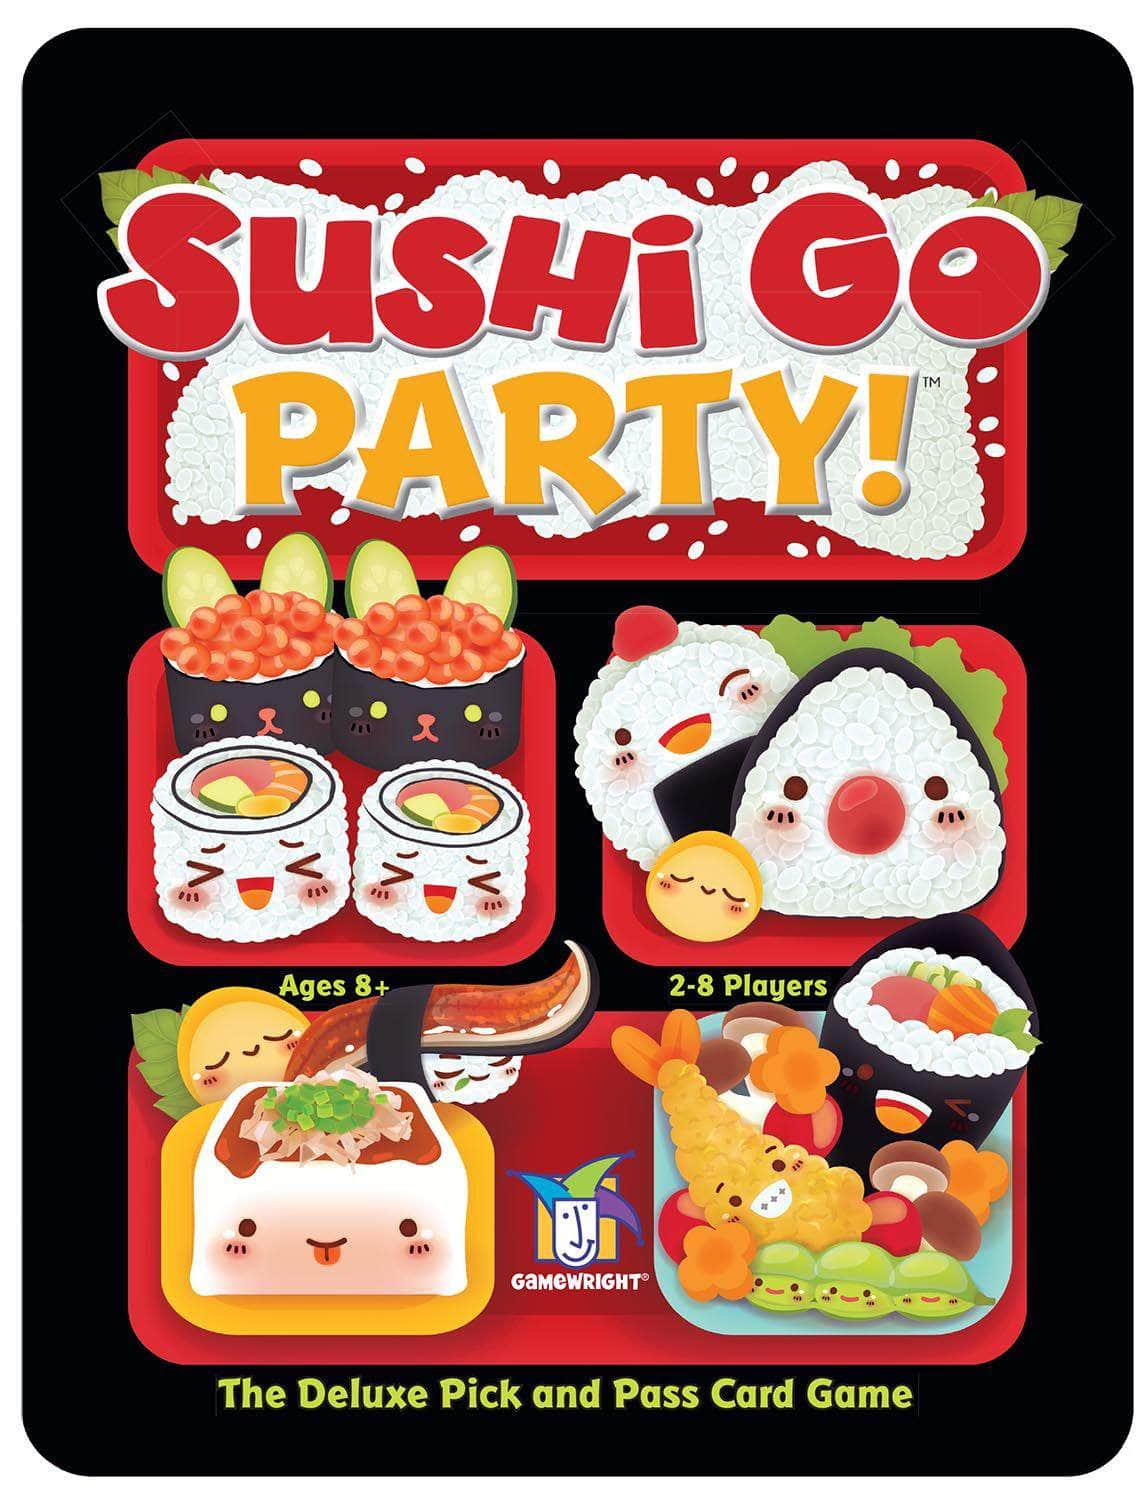 Sushi Go Party! Retail Board Game Gamewright, Devir, Rebel, uplay.it edizioni, White Goblin Games, Zoch Verlag KS800484A